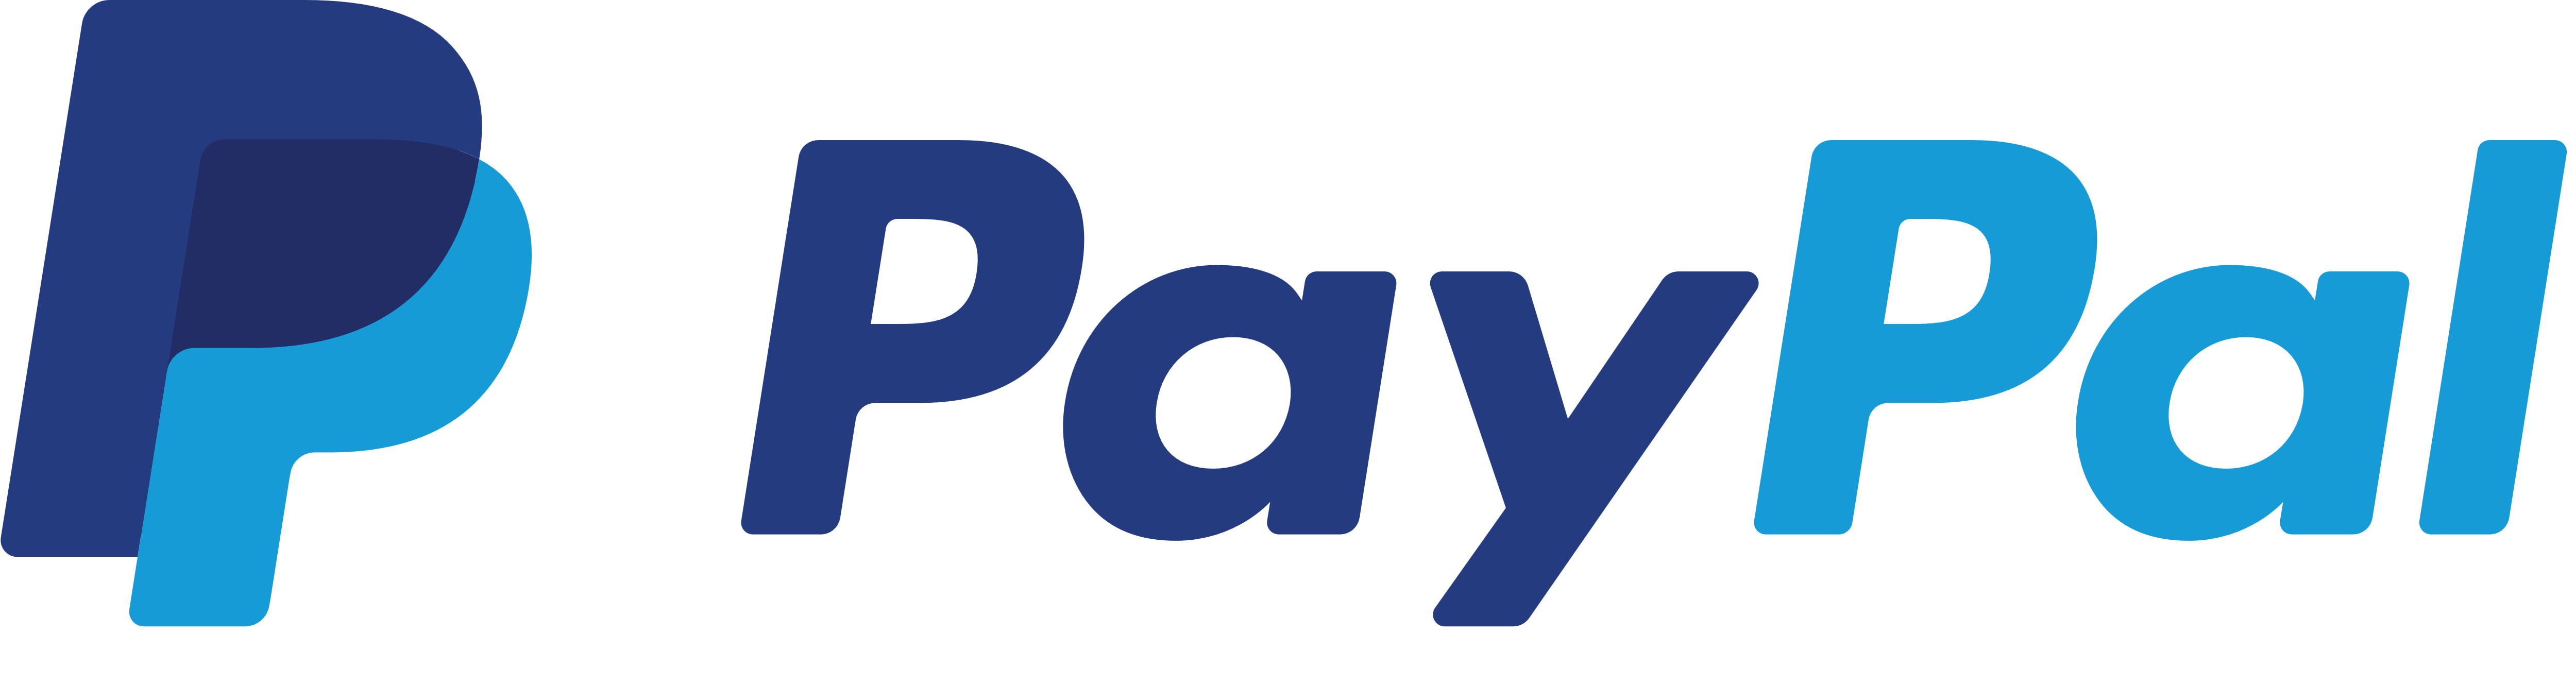 PayPaltype logo